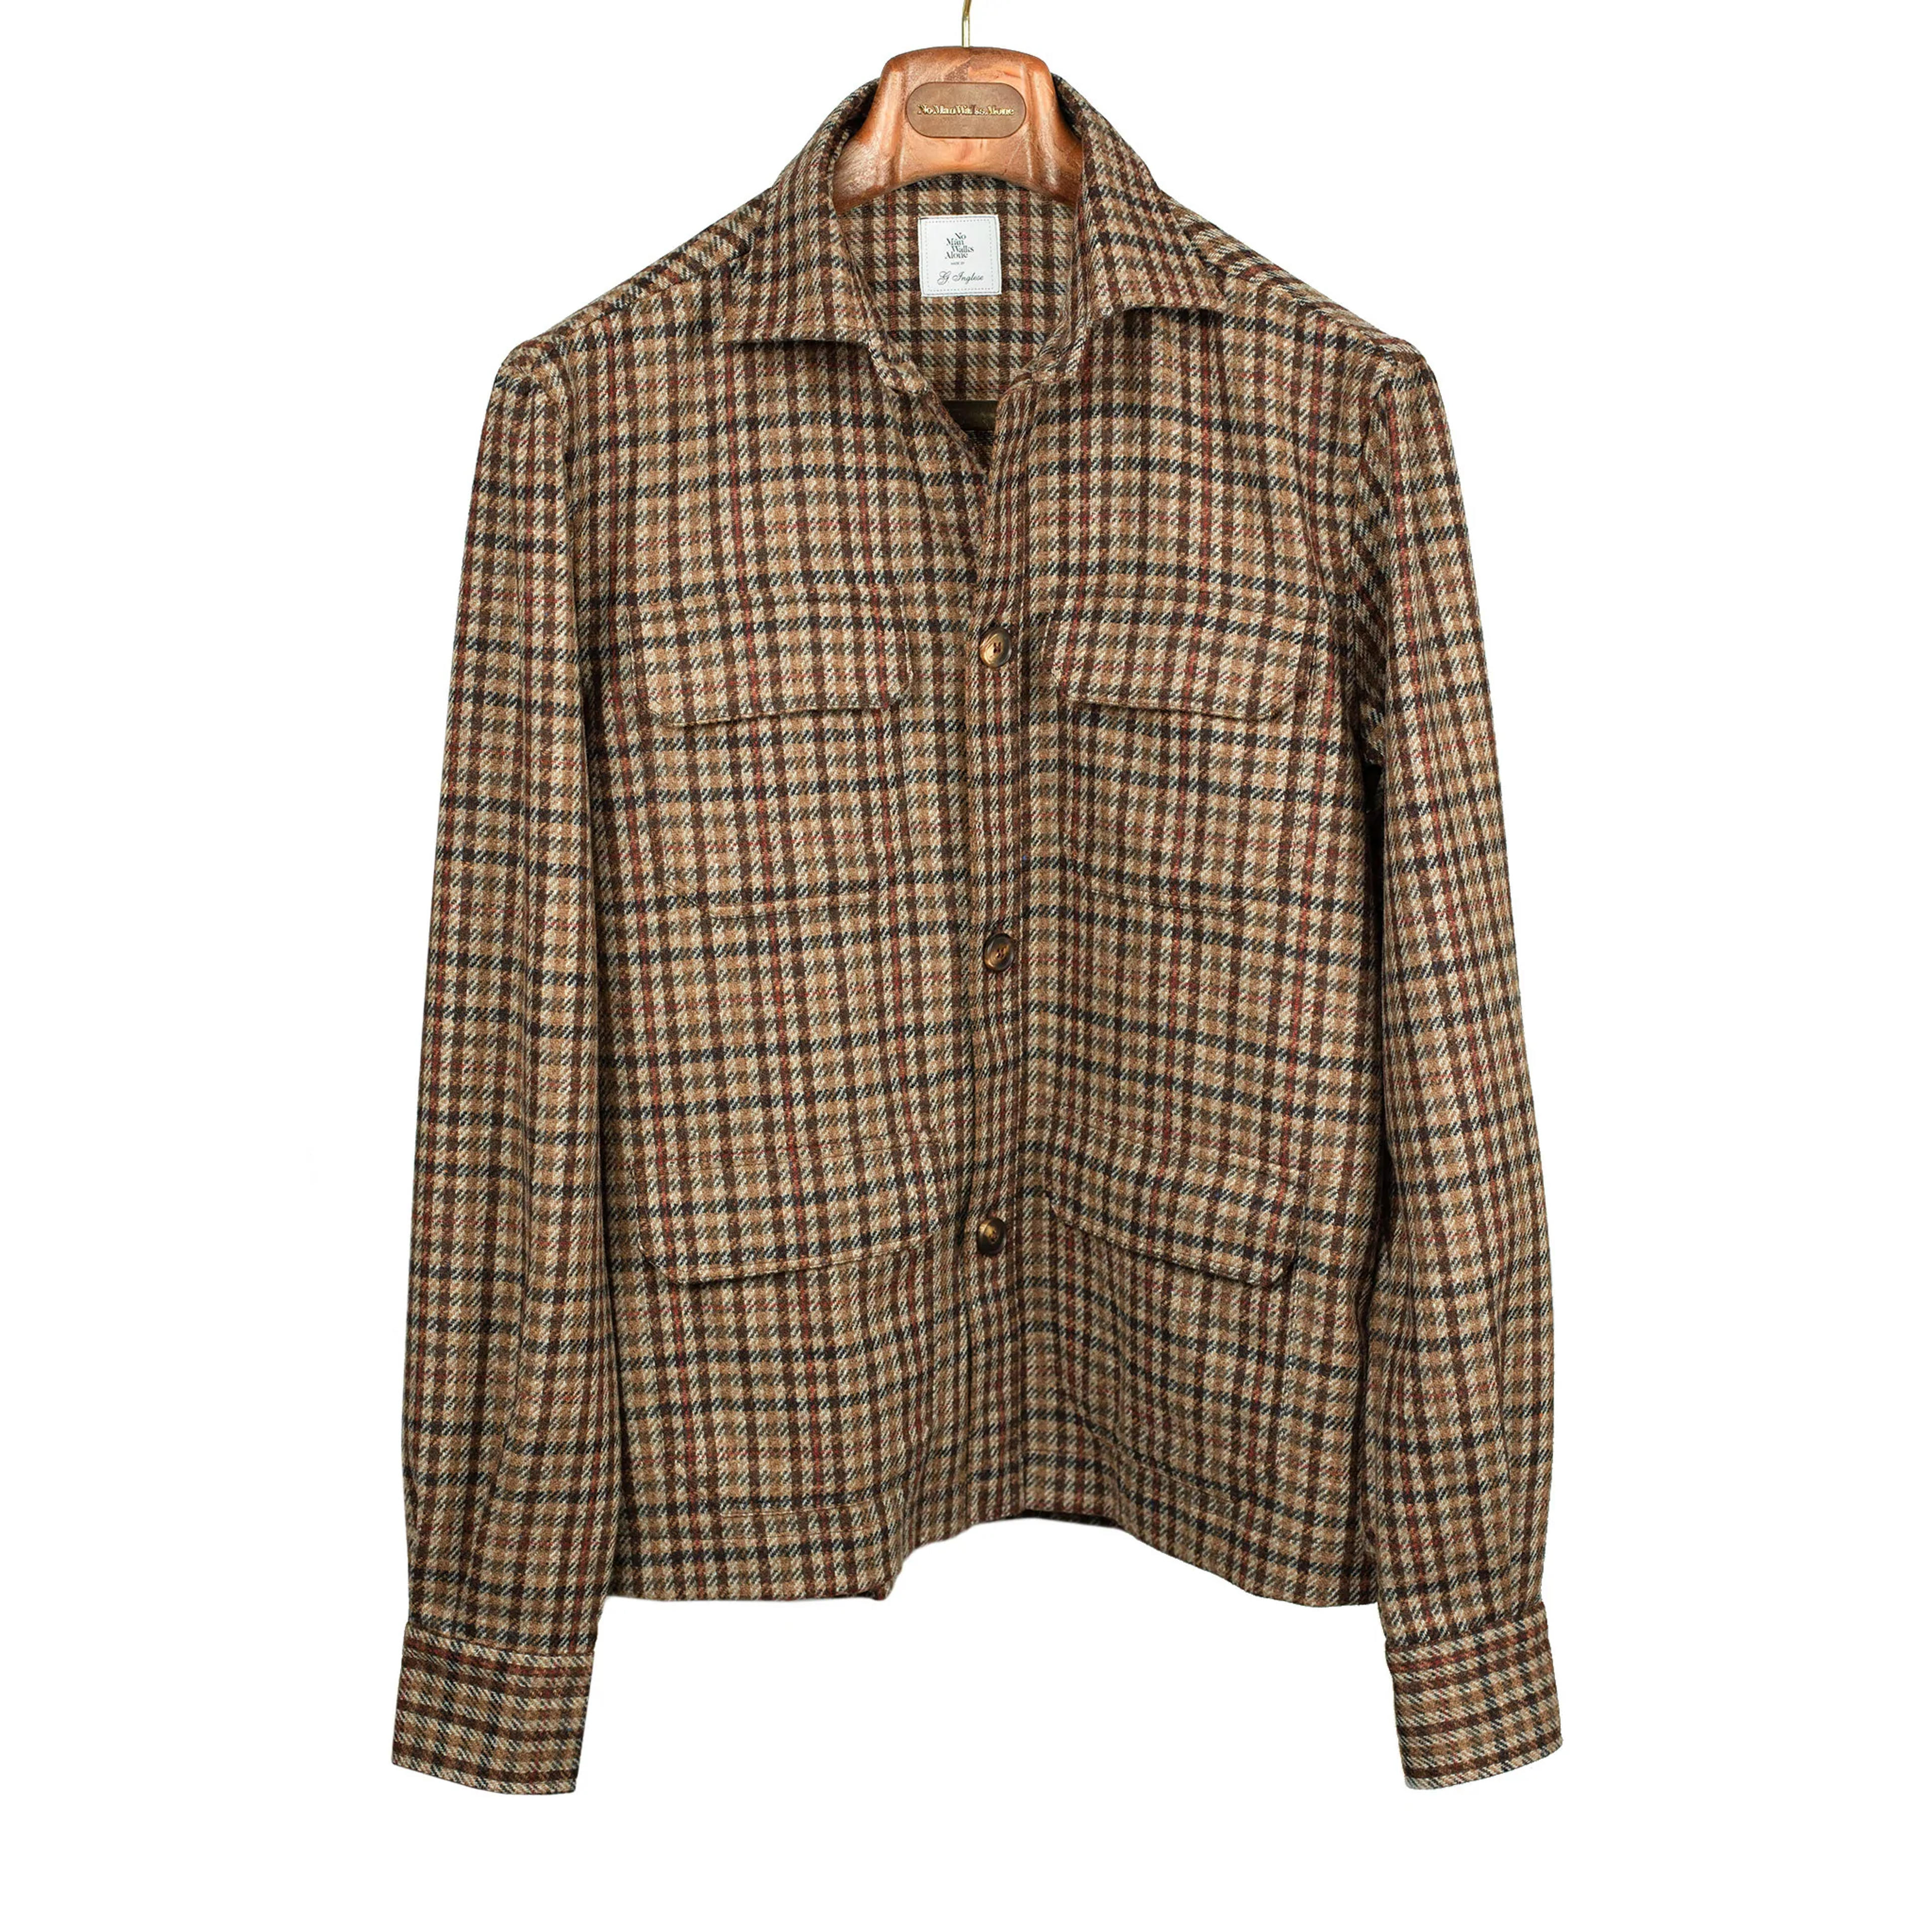 "Giubbottino" shirt jacket in Bottoli wool brown guncheck (restock) - S